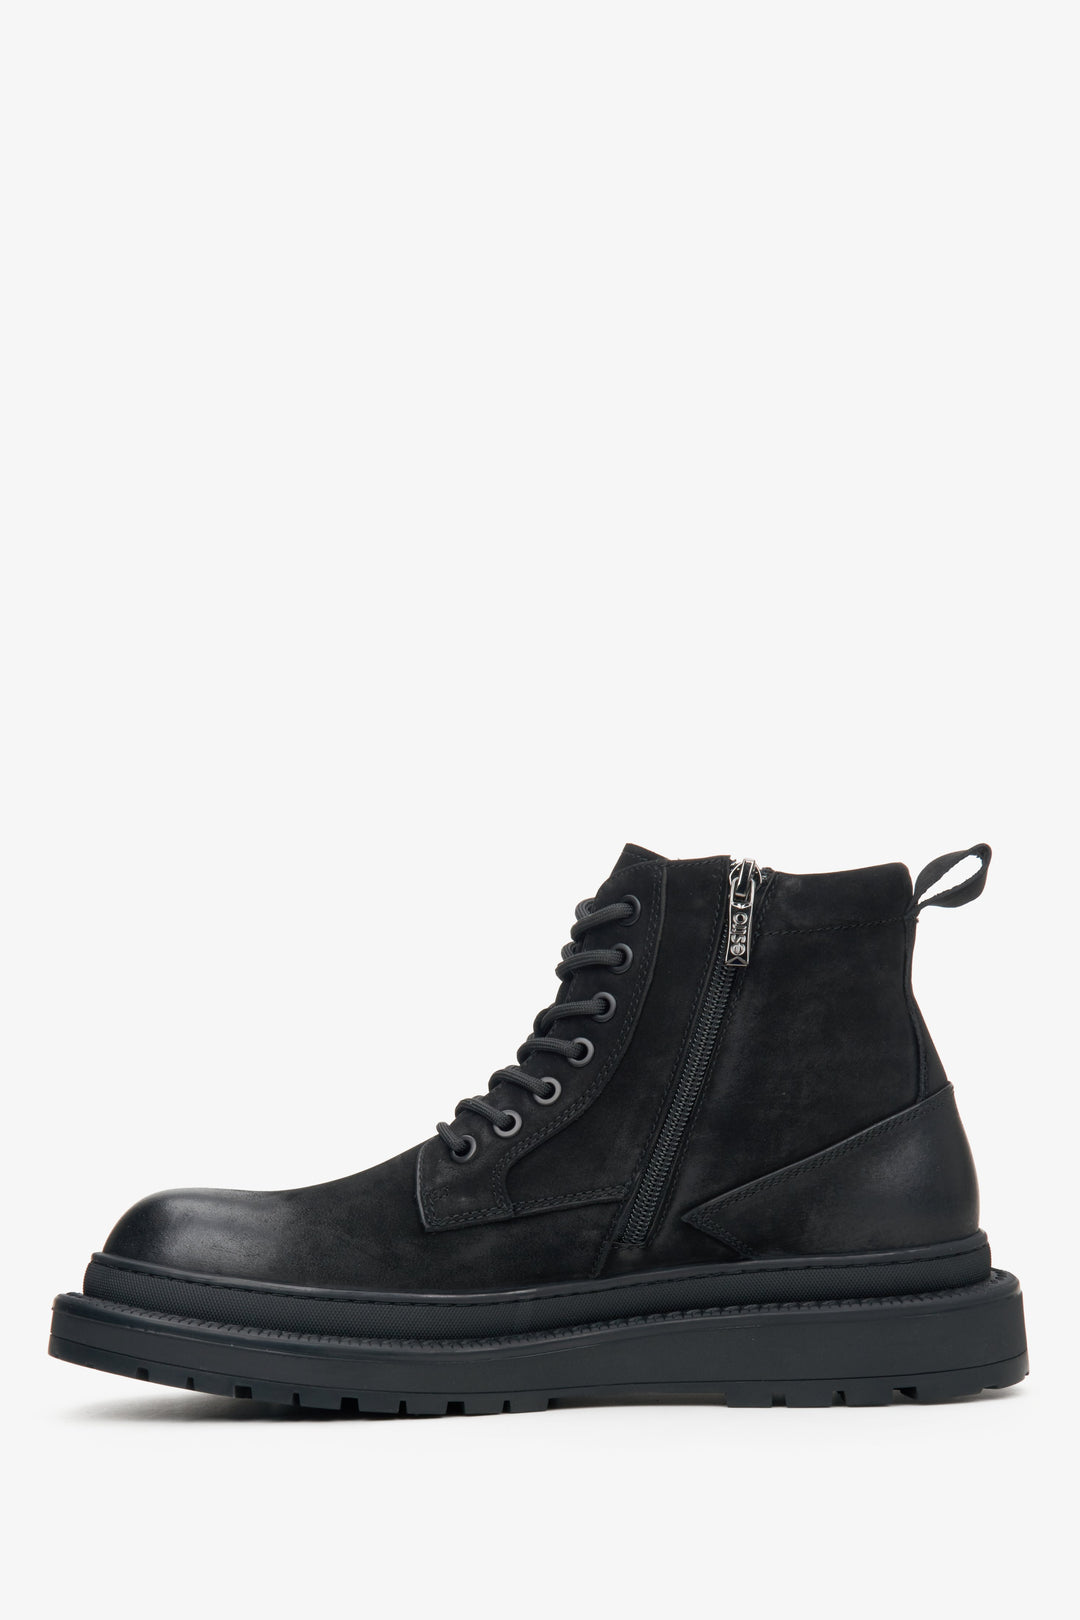 Men's black boots in nubuck by Estro - shoe profile.